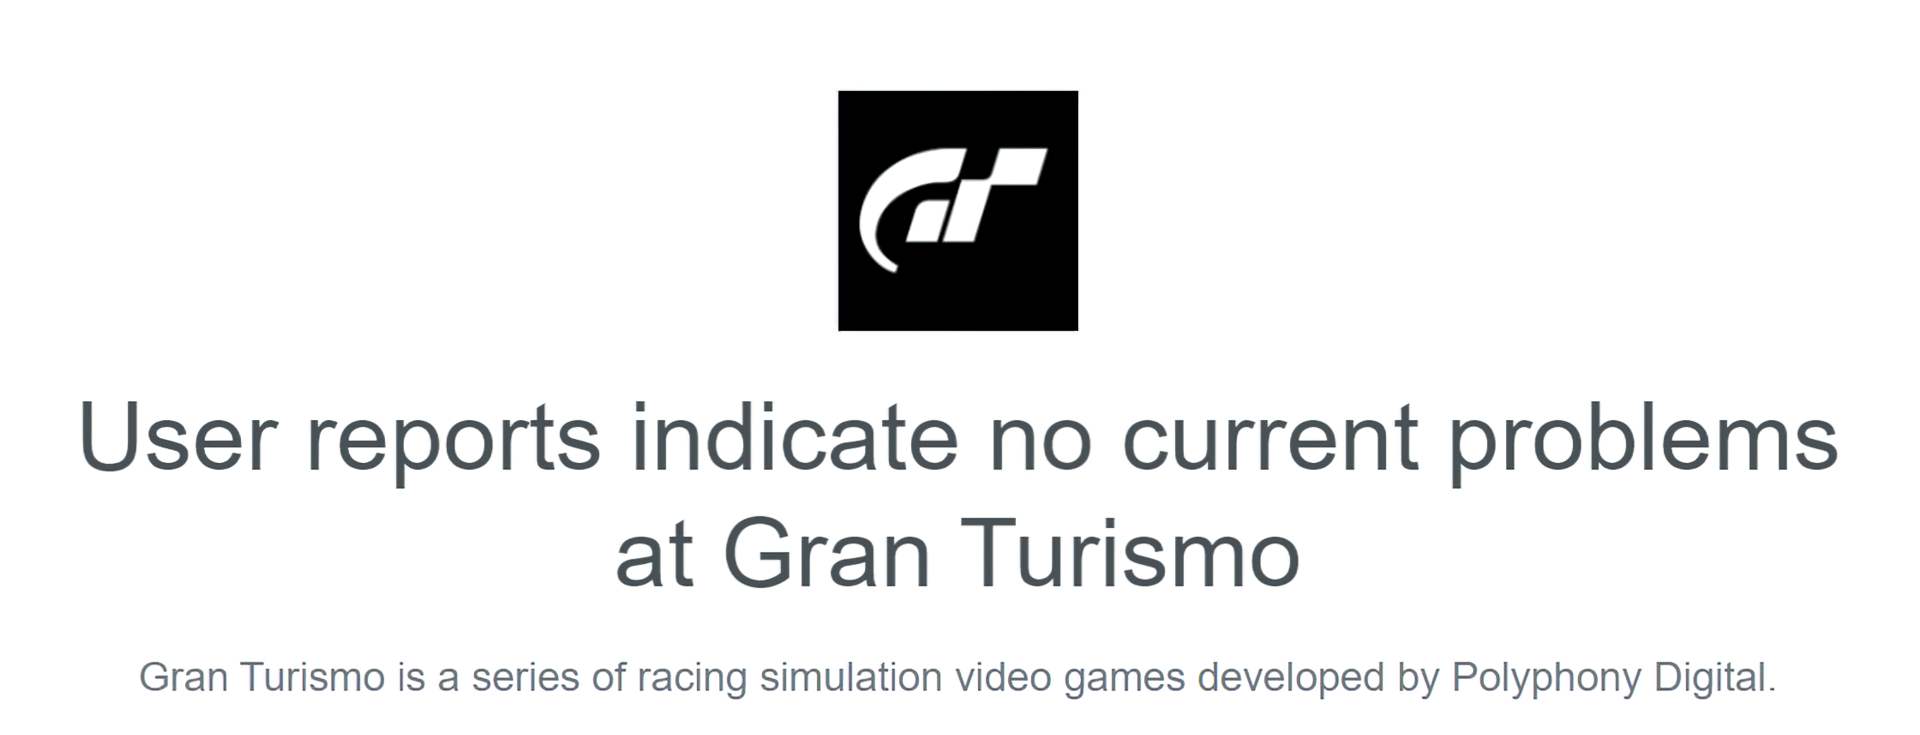 Gran Turismo 7 server status